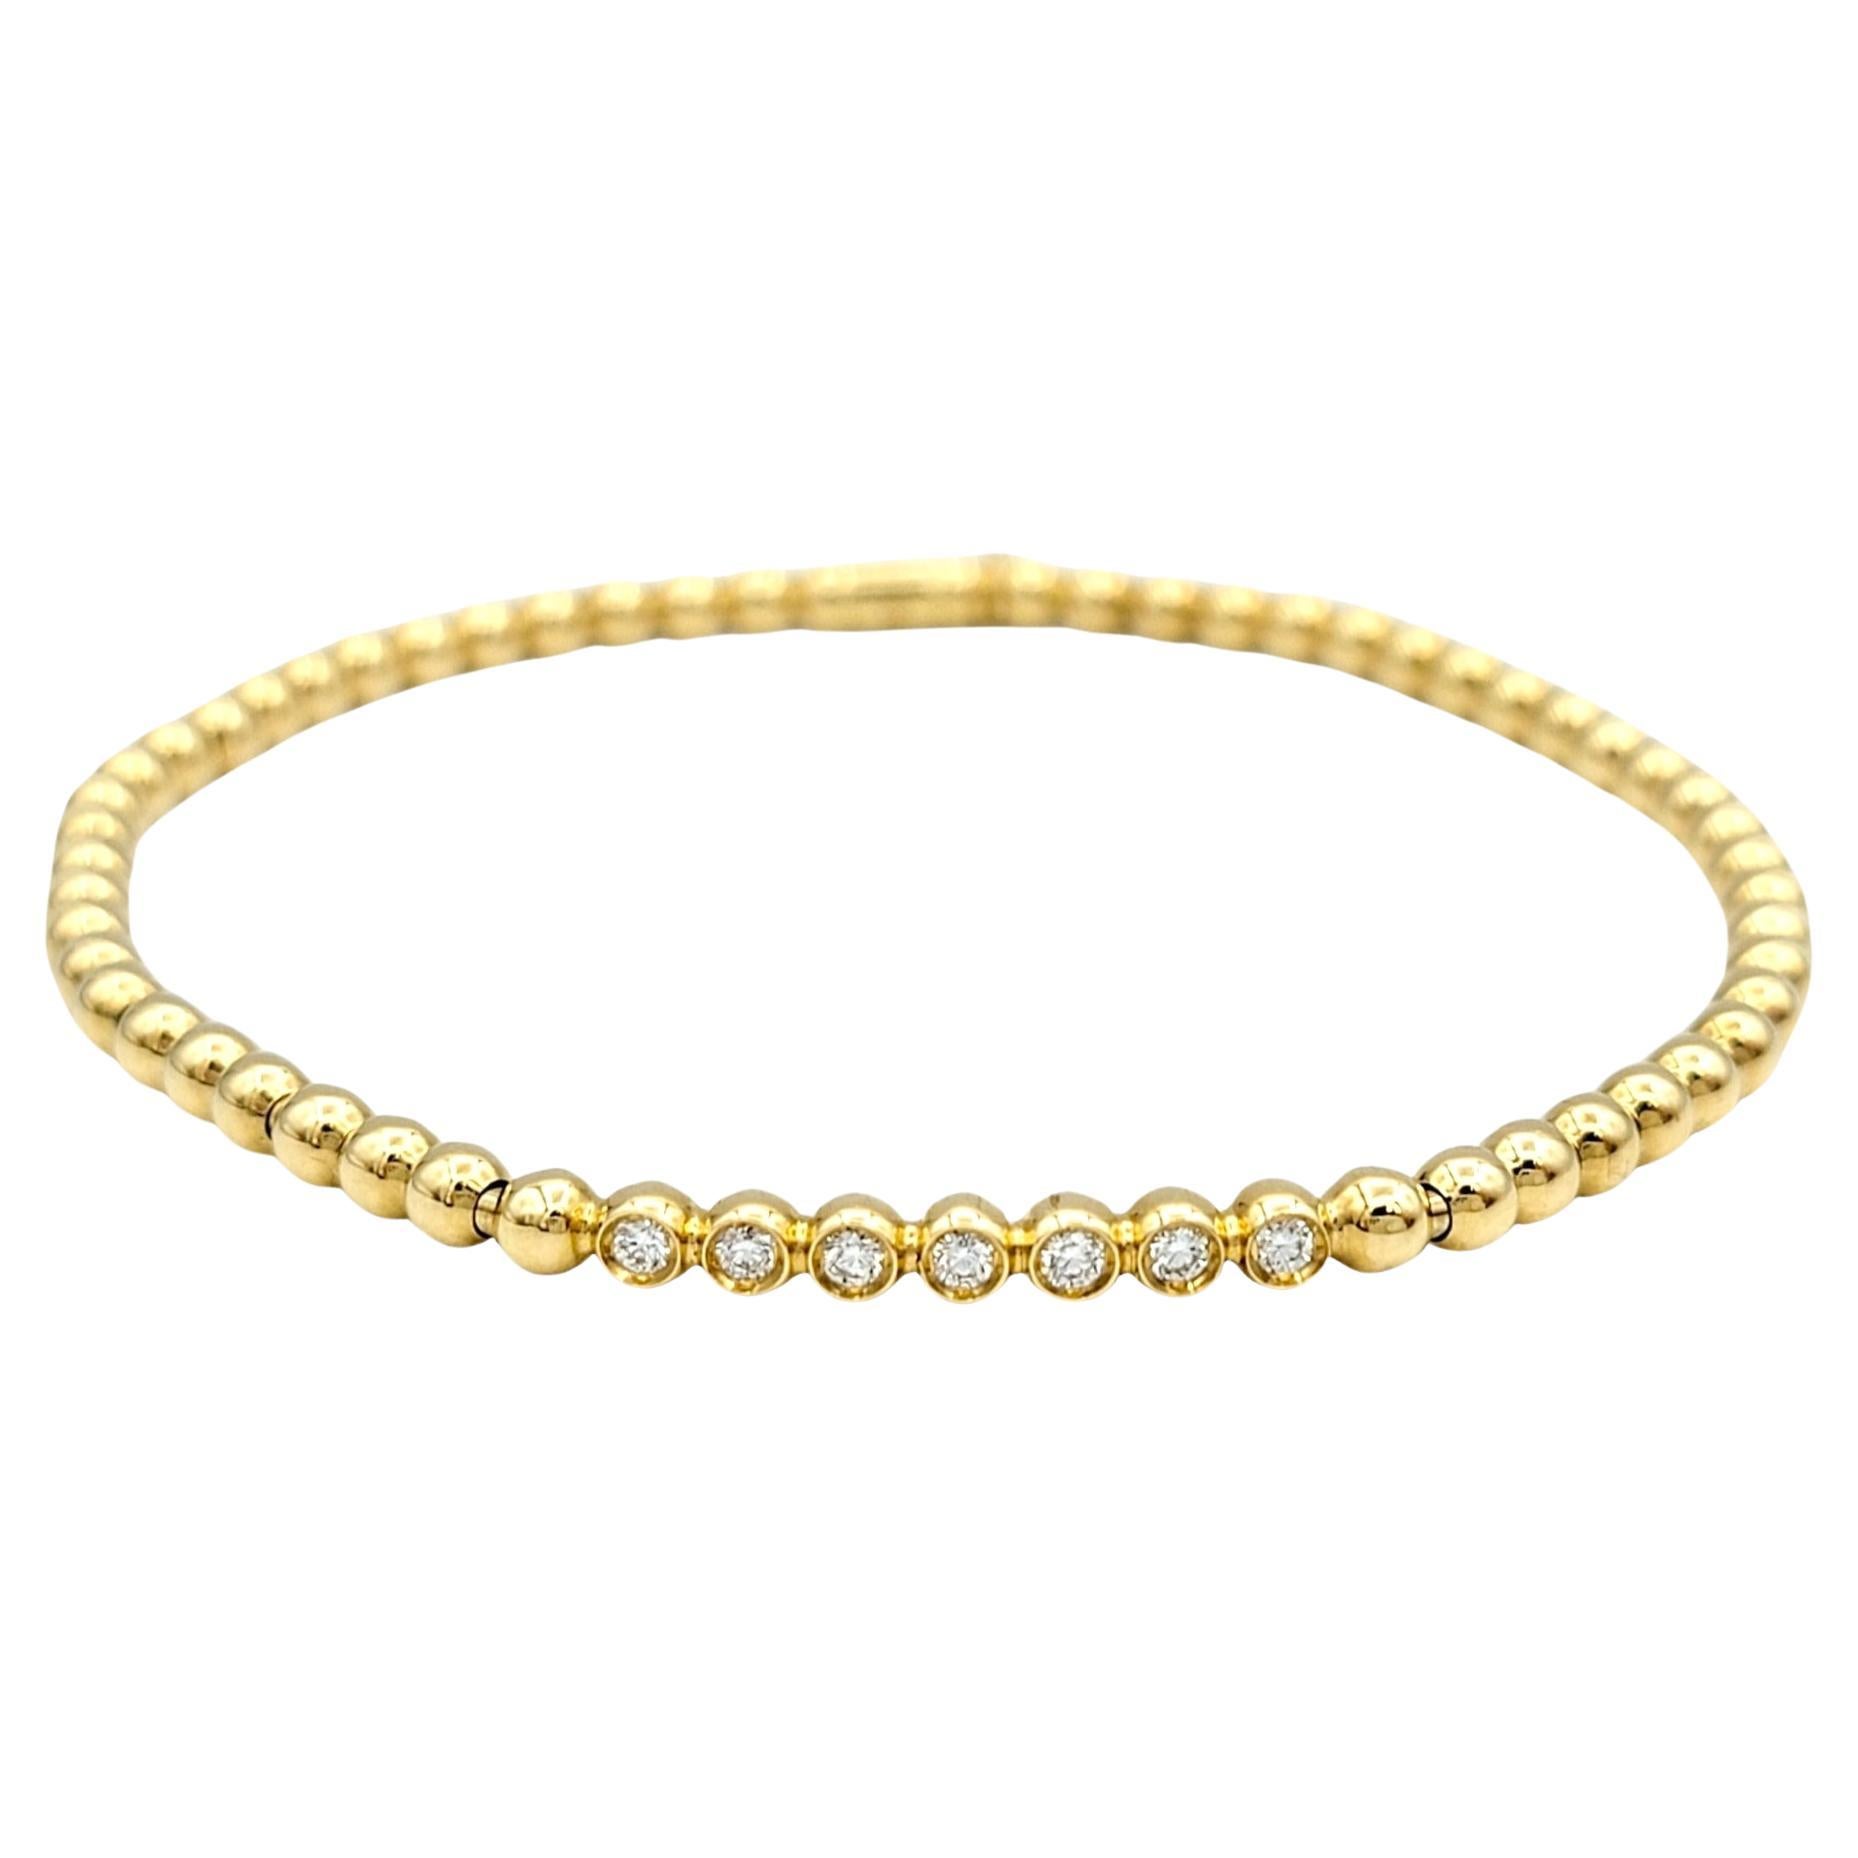 Hulchi Belluni Tresore Collection 3mm Stretch Bracelet Yellow Gold and Diamonds